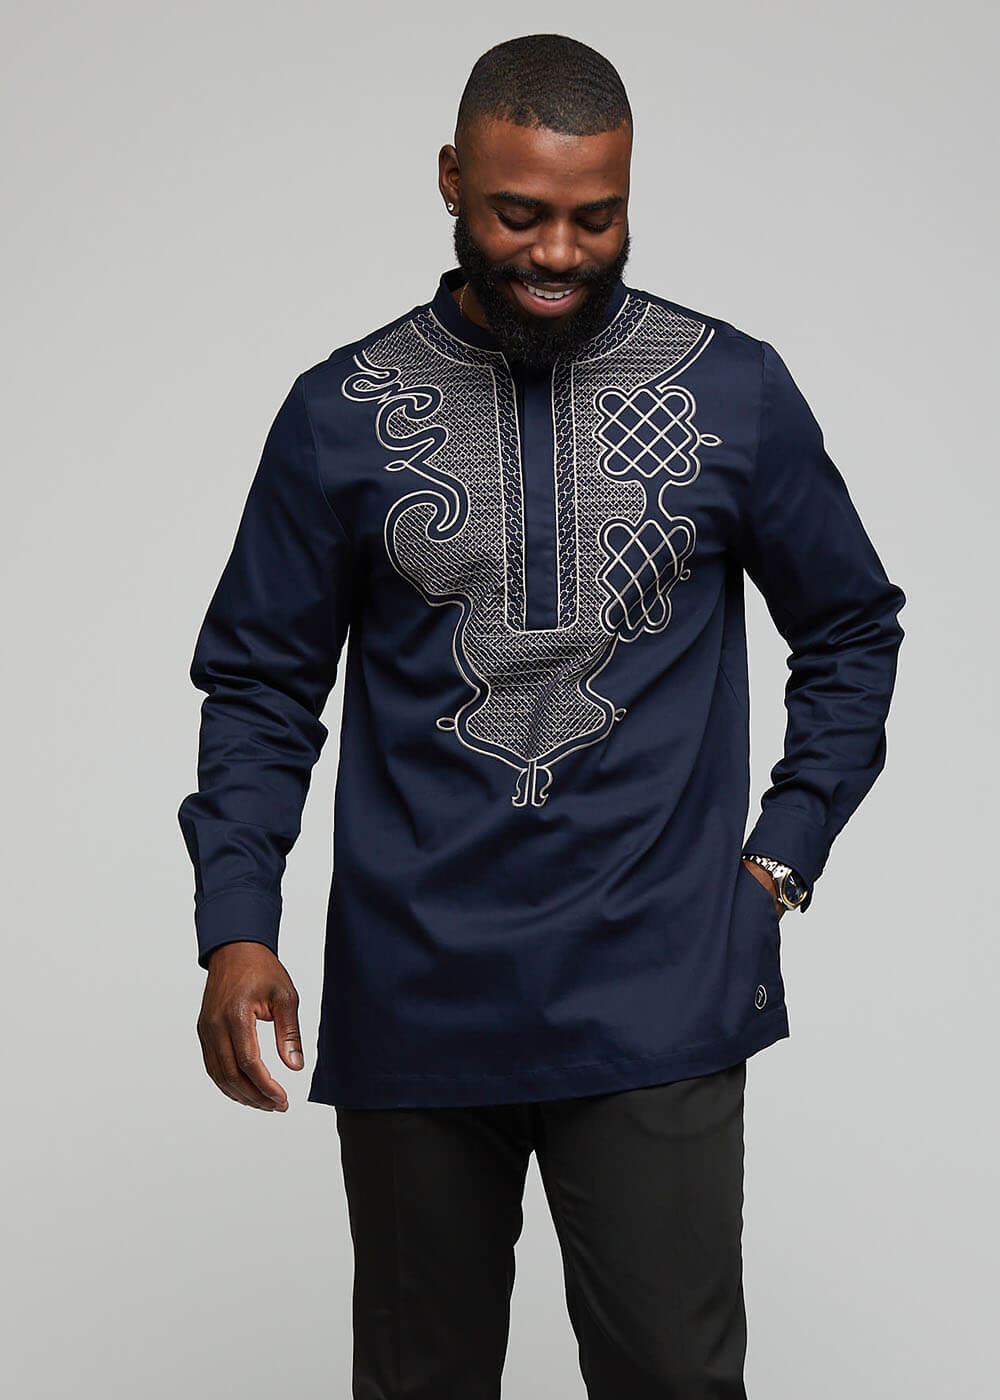 Dubaku Men's Traditional African Embroidery Shirt Navy – D'IYANU